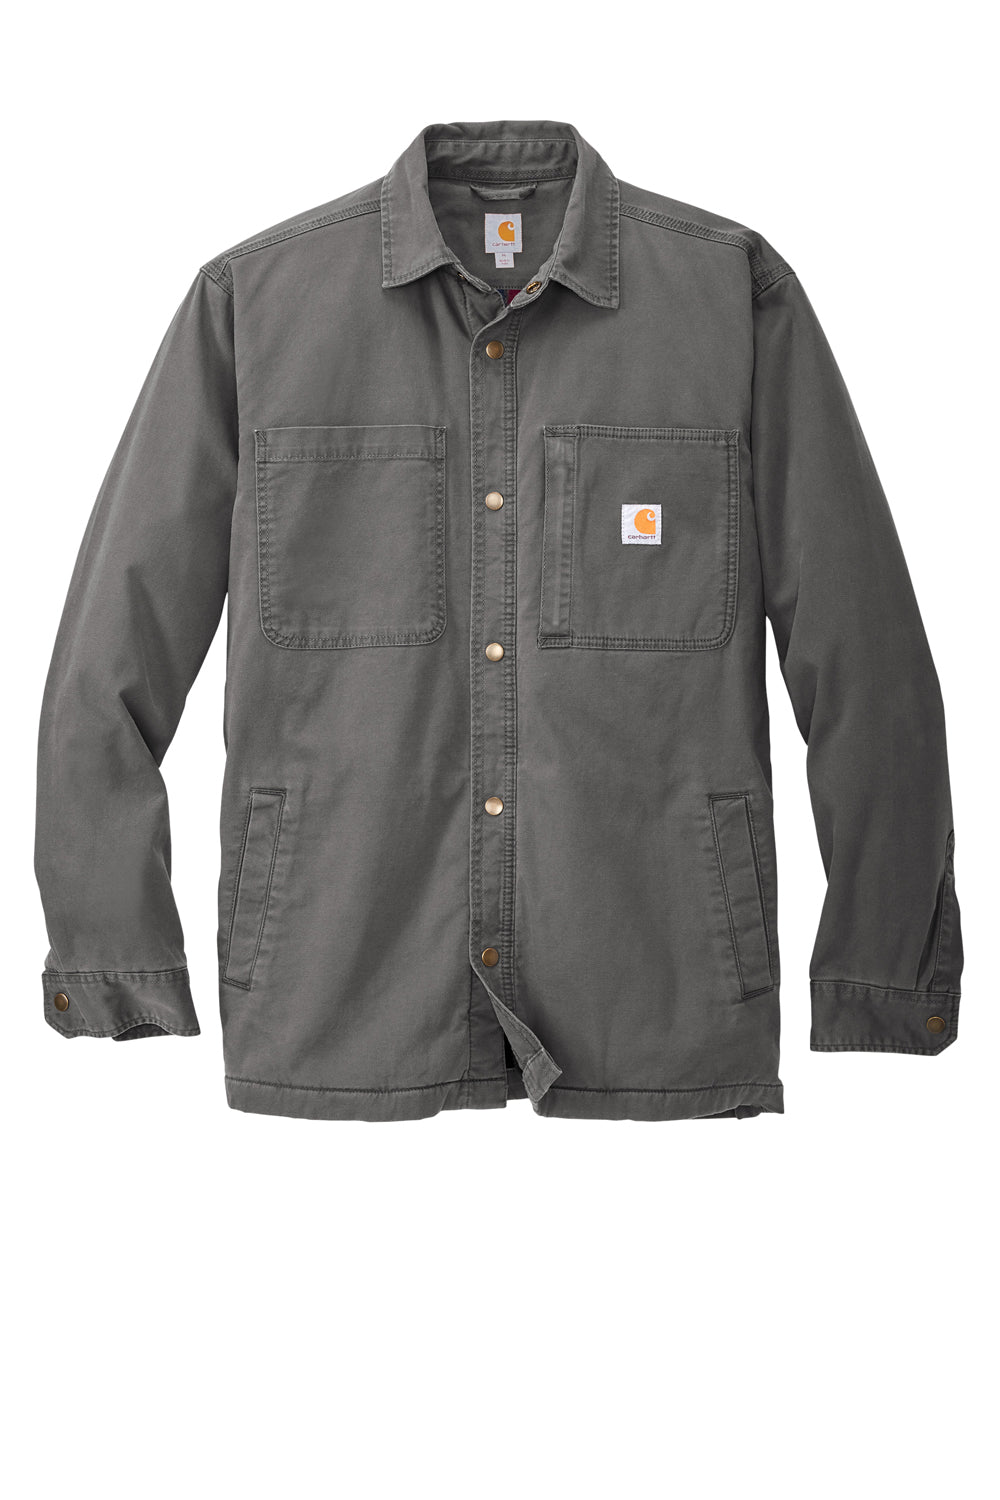 Carhartt CT105532 Mens Rugged Flex Button Down Shirt Jacket Shadow Grey Flat Front